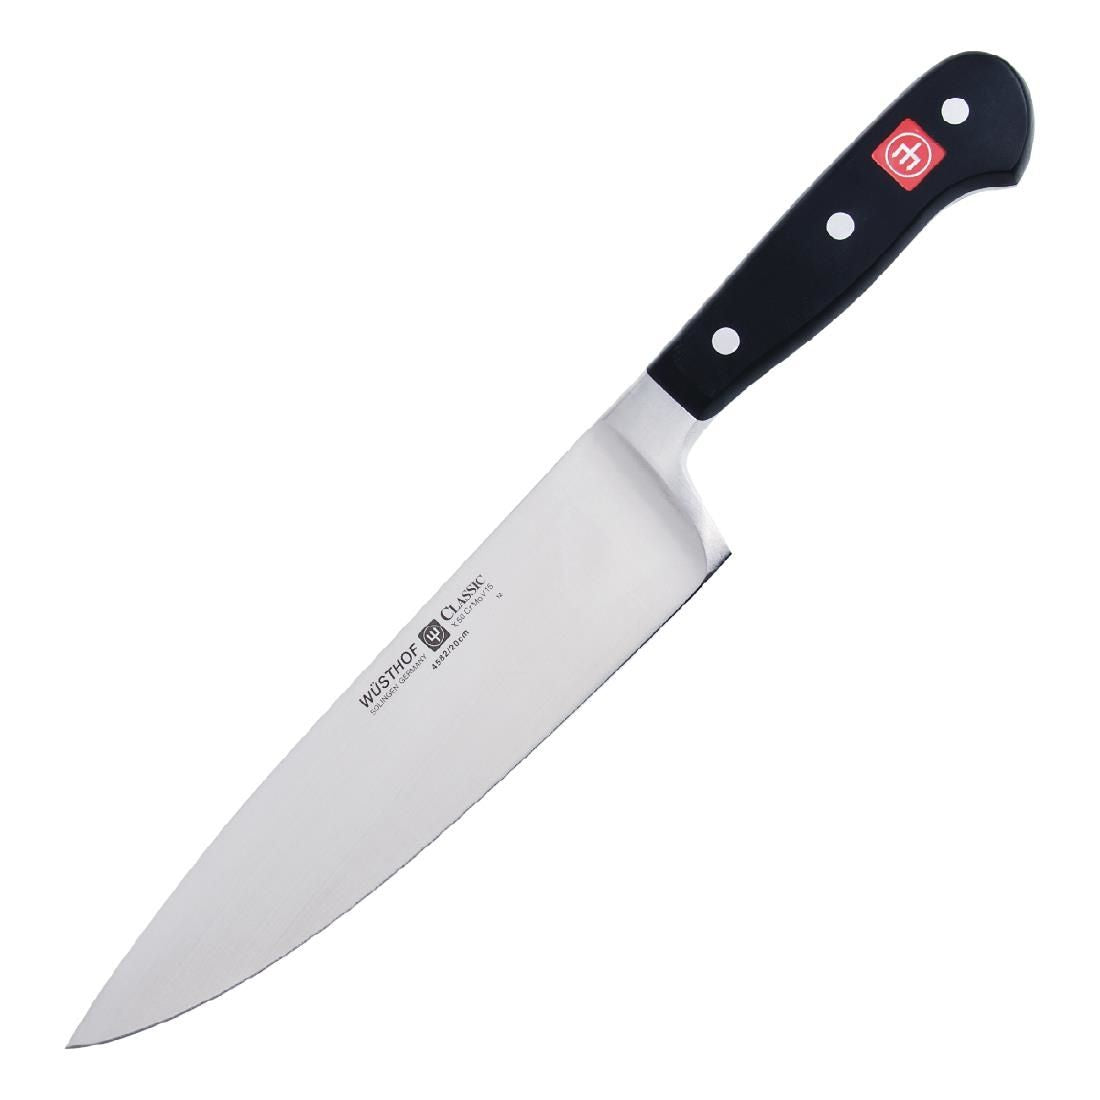 C907 Wusthof Chef Knife 20.5cm